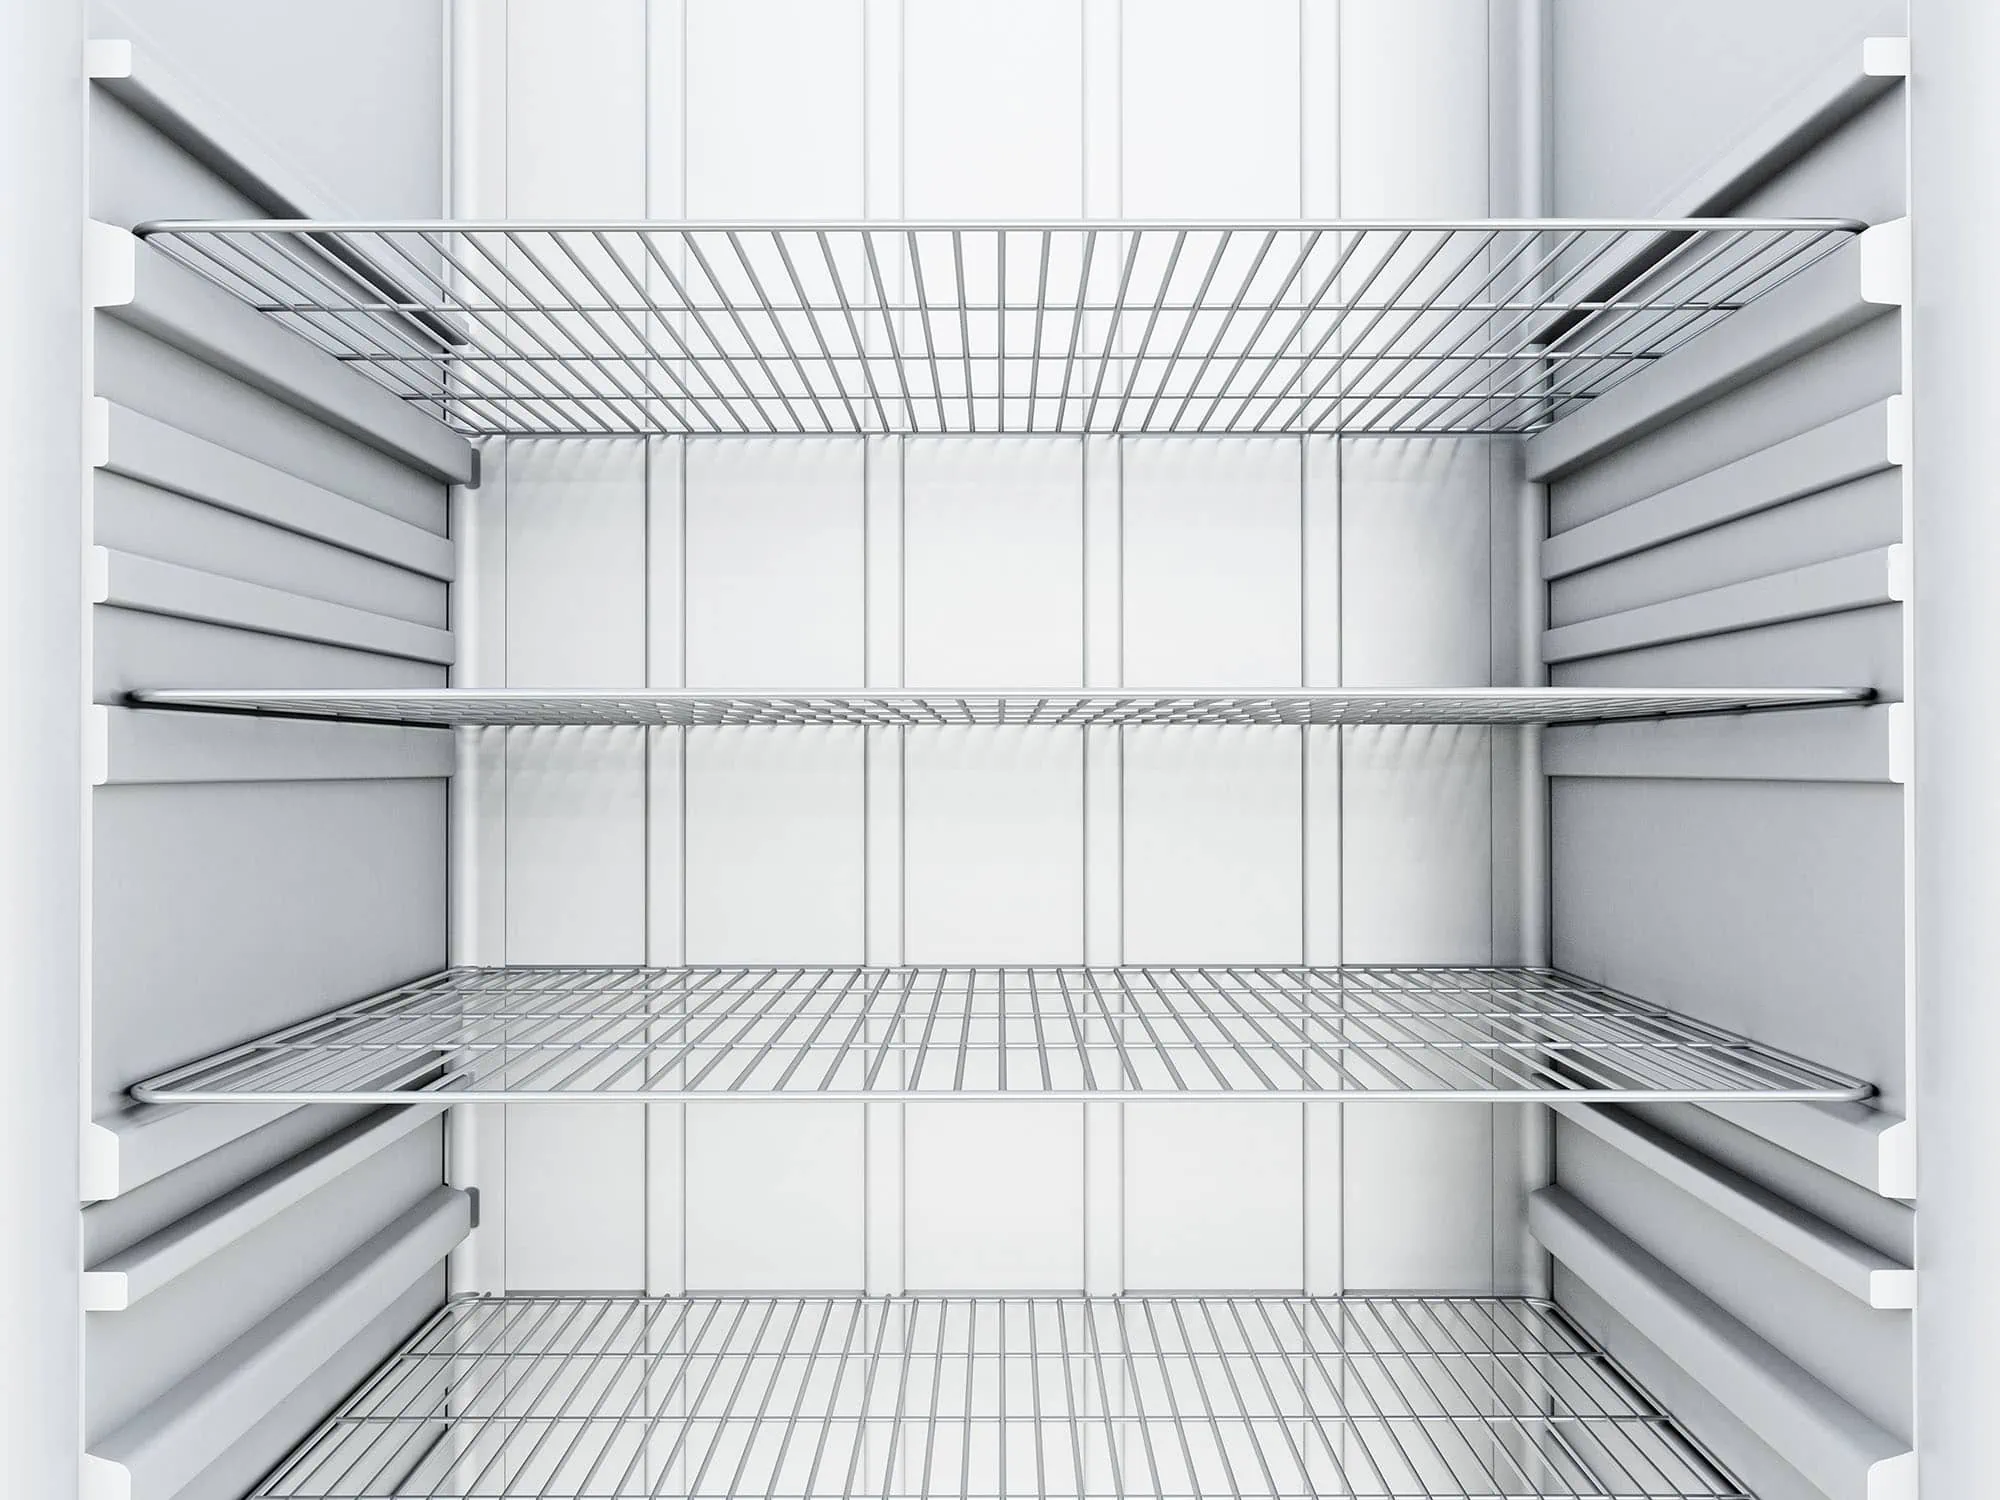 View of empty refrigerator interior